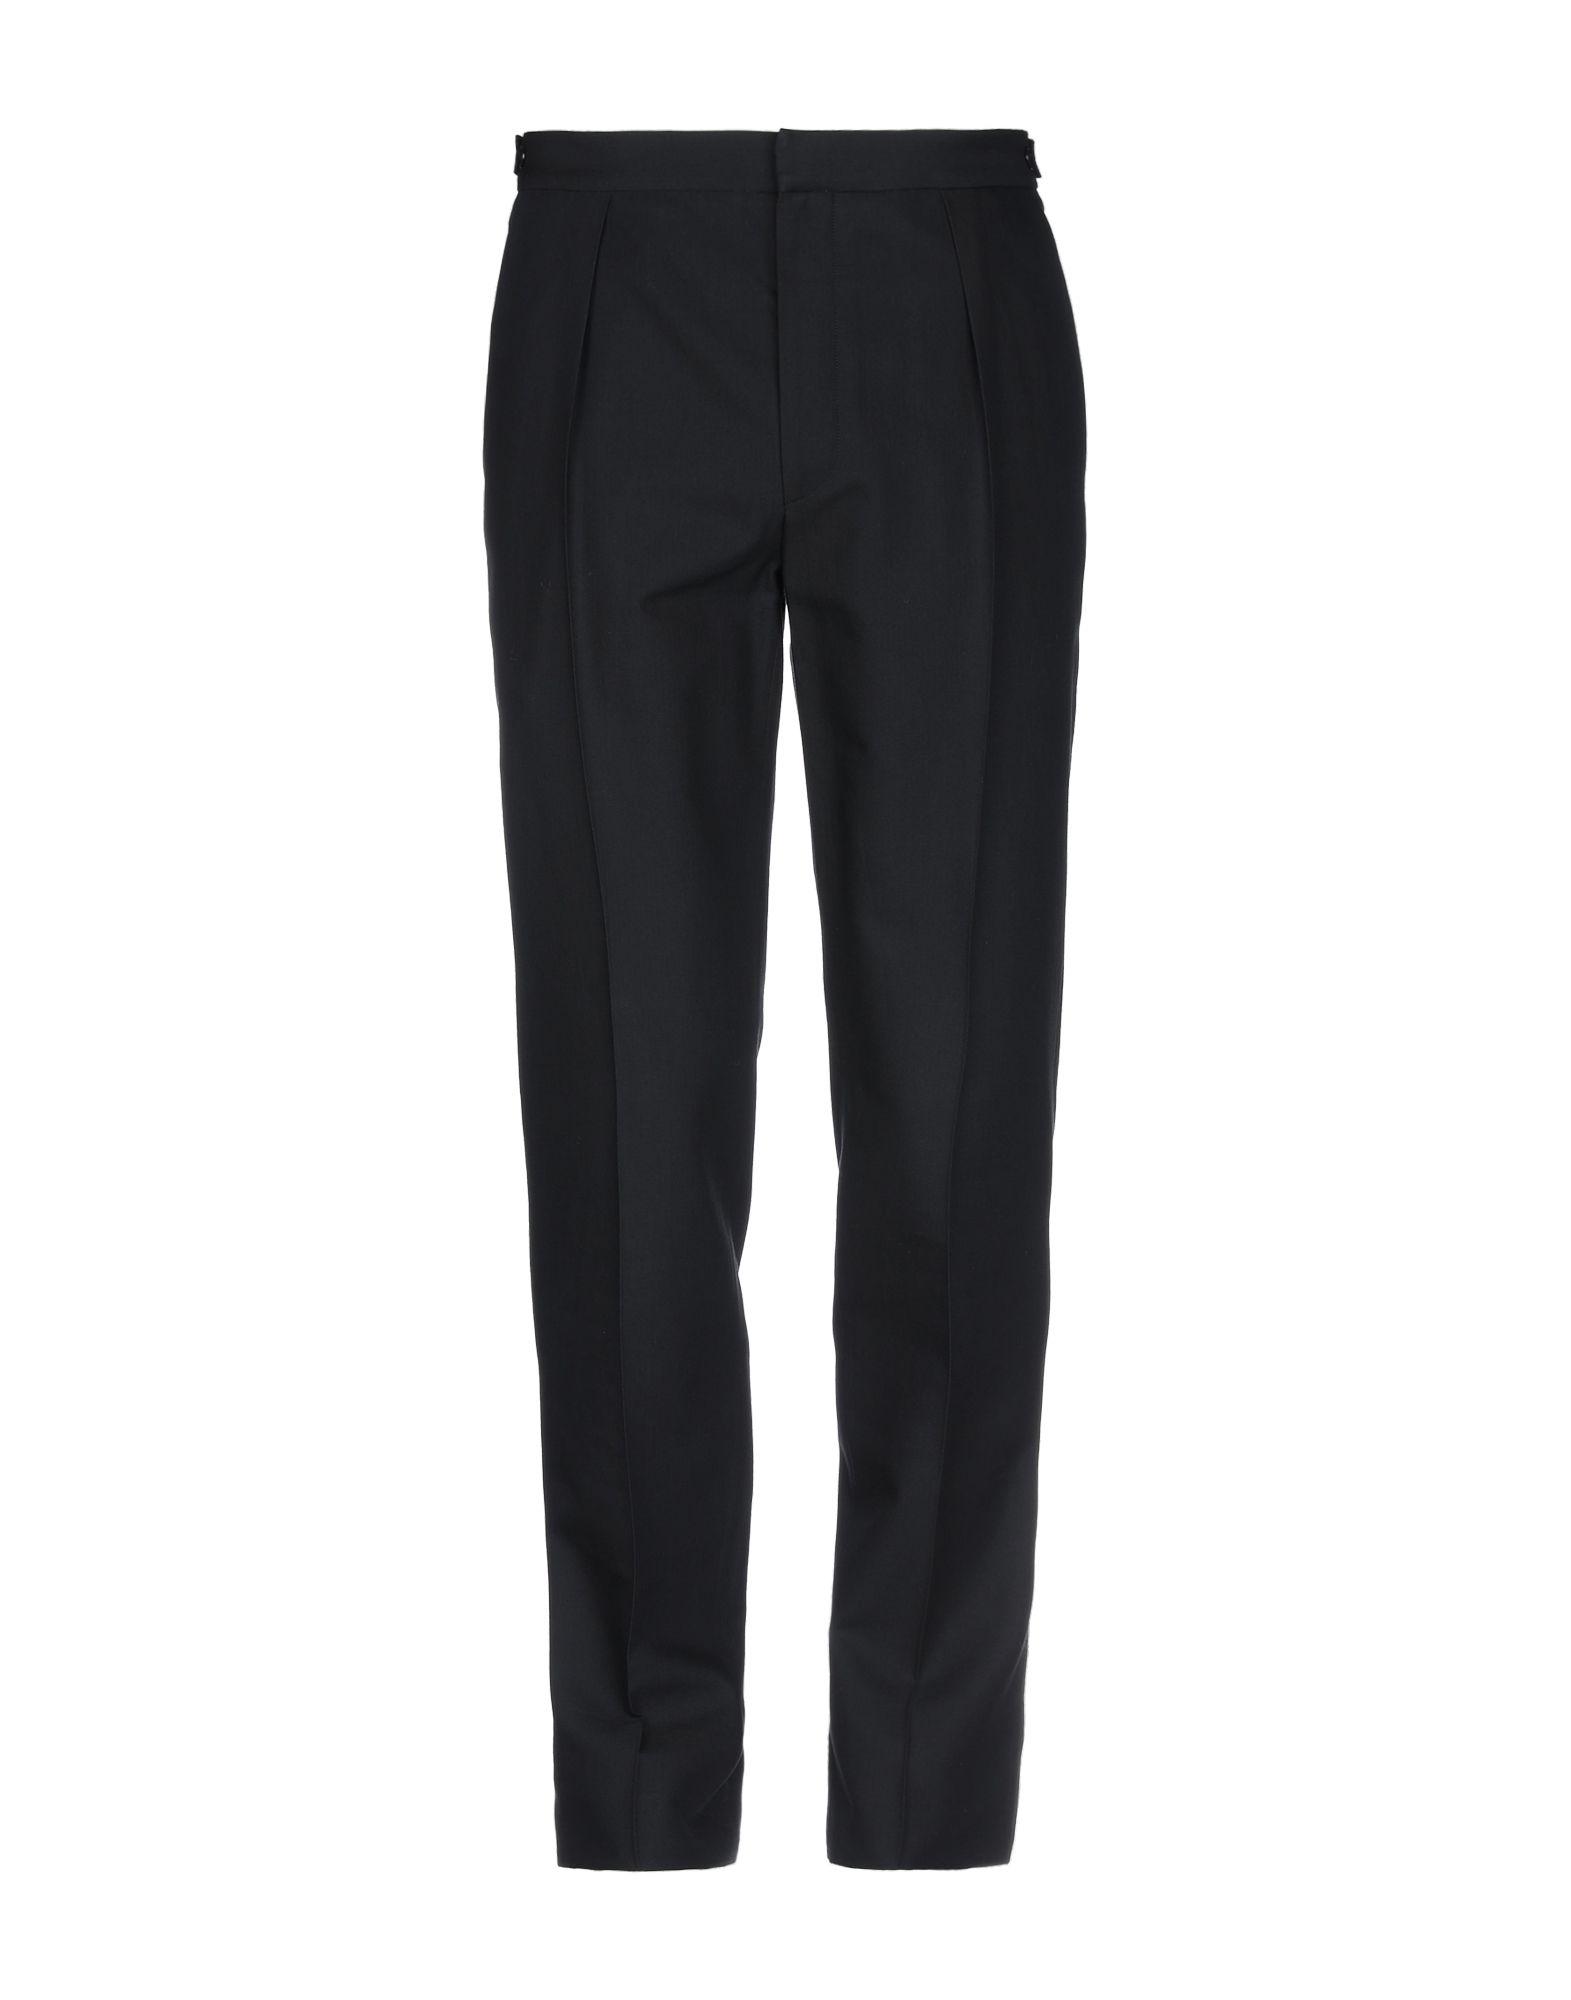 Bottega Veneta Wool Casual Pants in Black for Men - Lyst